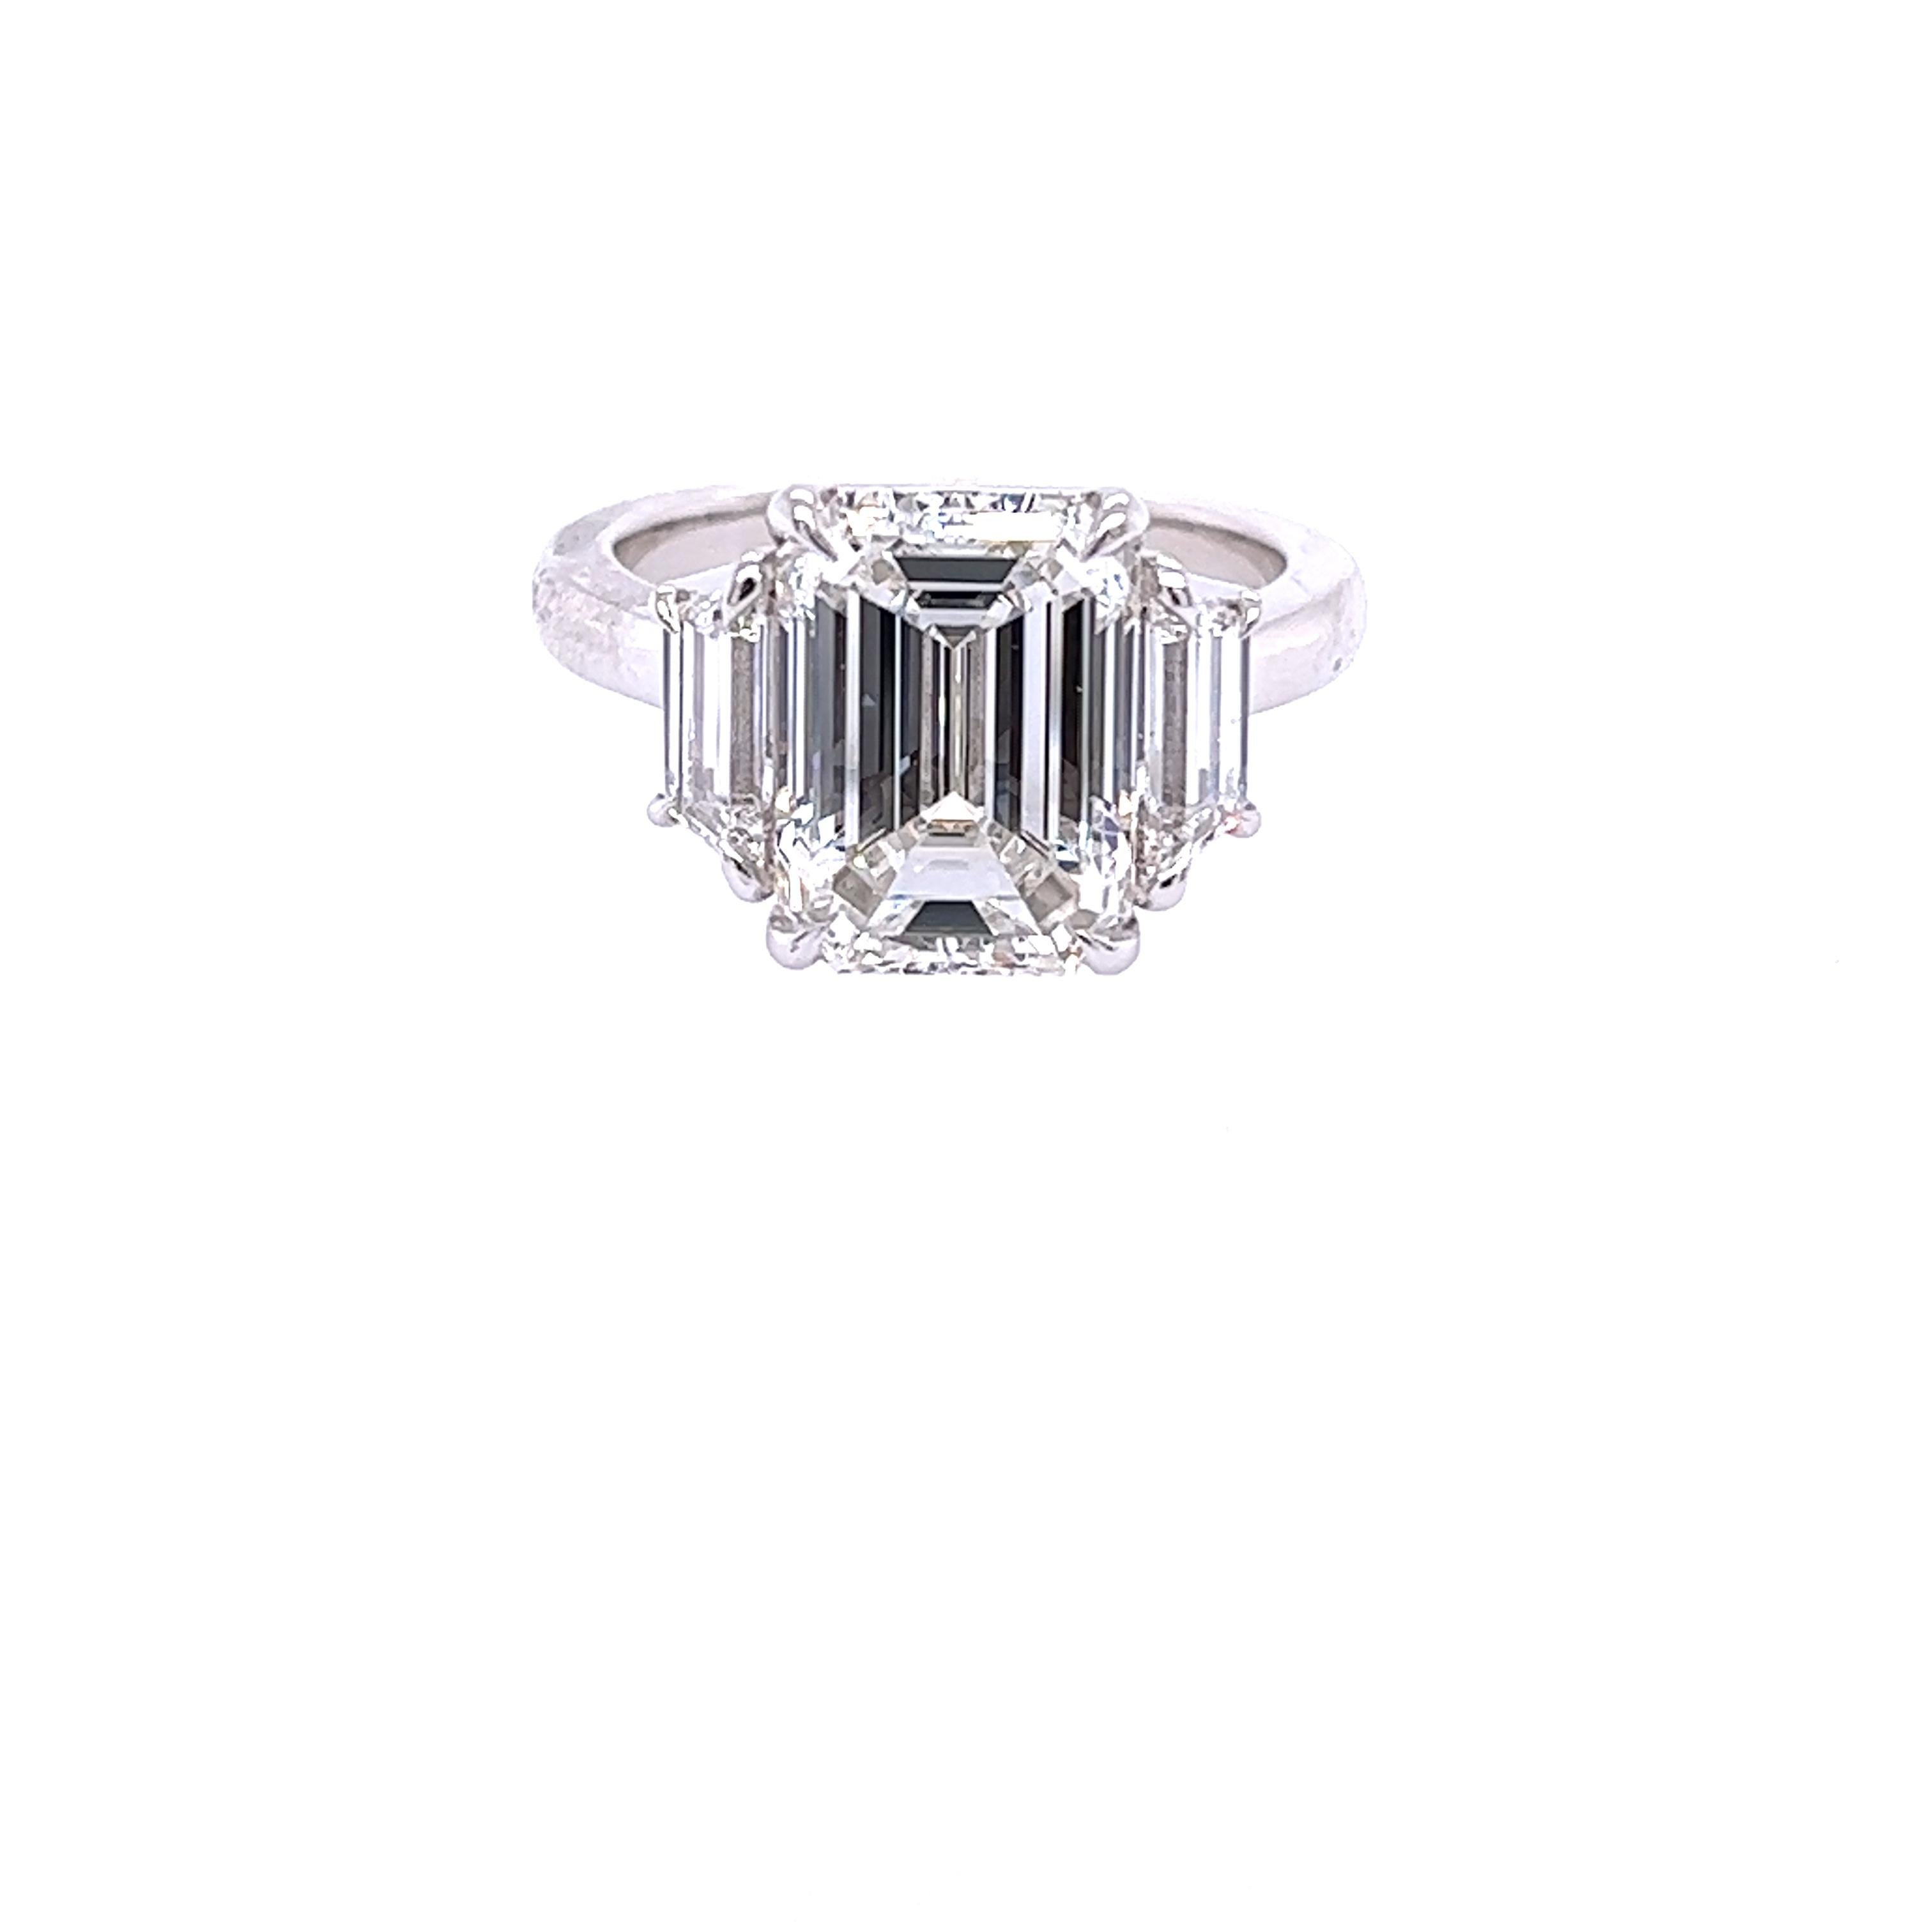 David Rosenberg 5.01 Carat Emerald Cut G VS1 GIA Diamond Engagement Ring For Sale 2